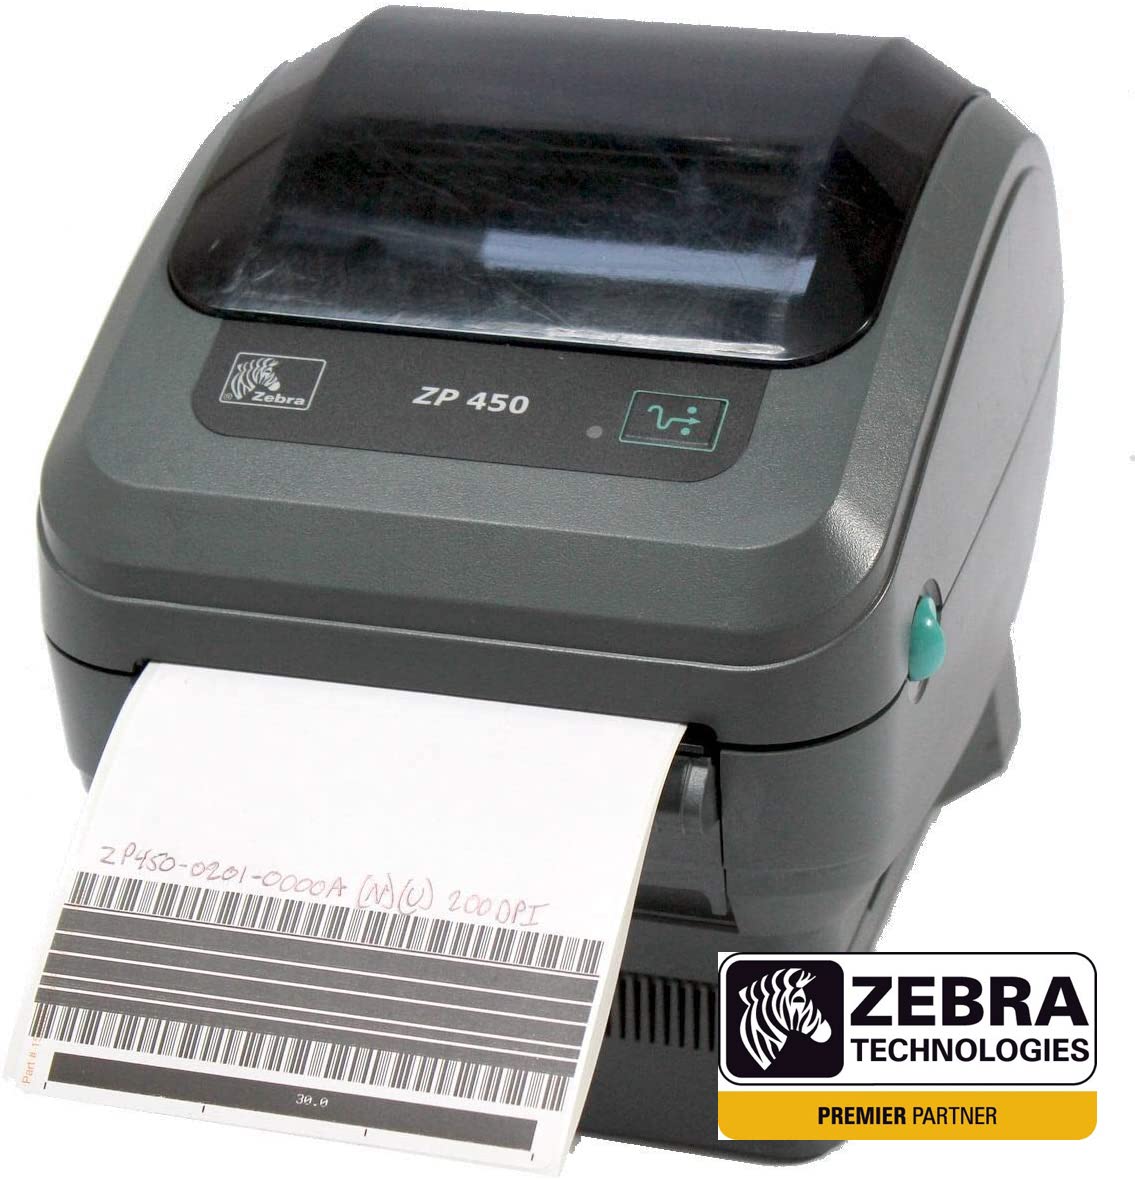 Zebra Zp450 Ctp Ups Thermal Label Printer Worldship Ready Parkmills 5805